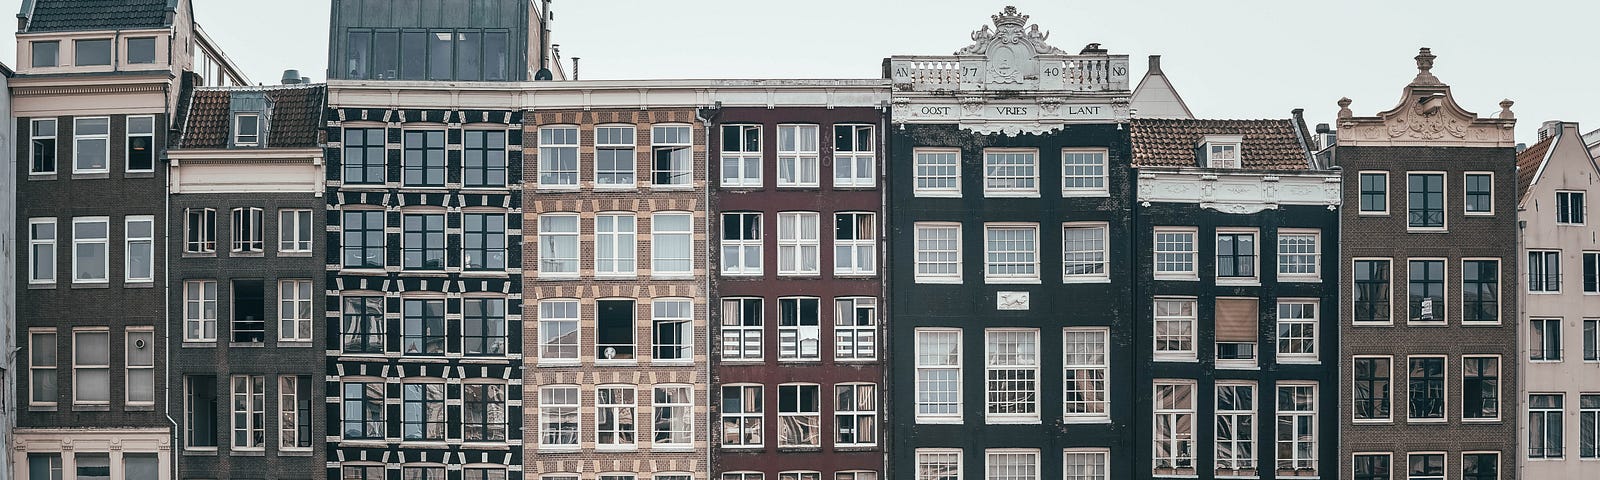 row houses of Amsterdam. Image Credits: Unsplash